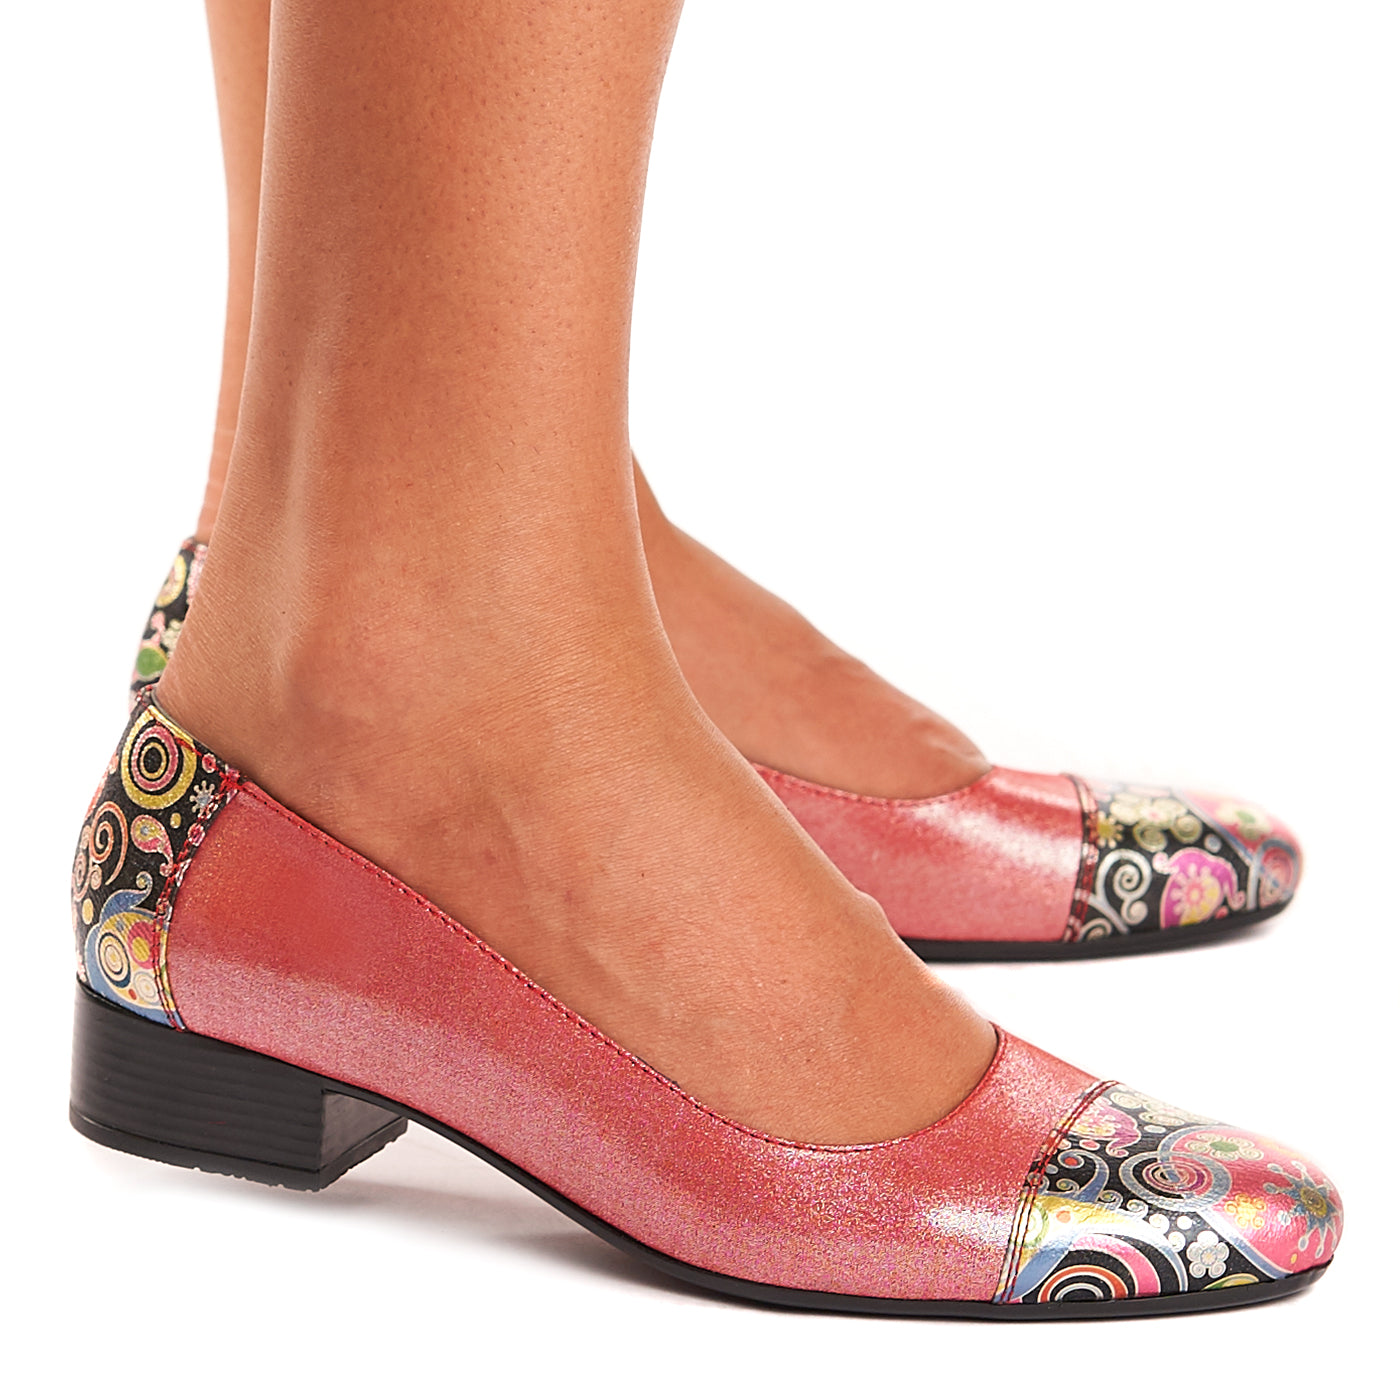 Pantofi dama piele naturala roz 1531